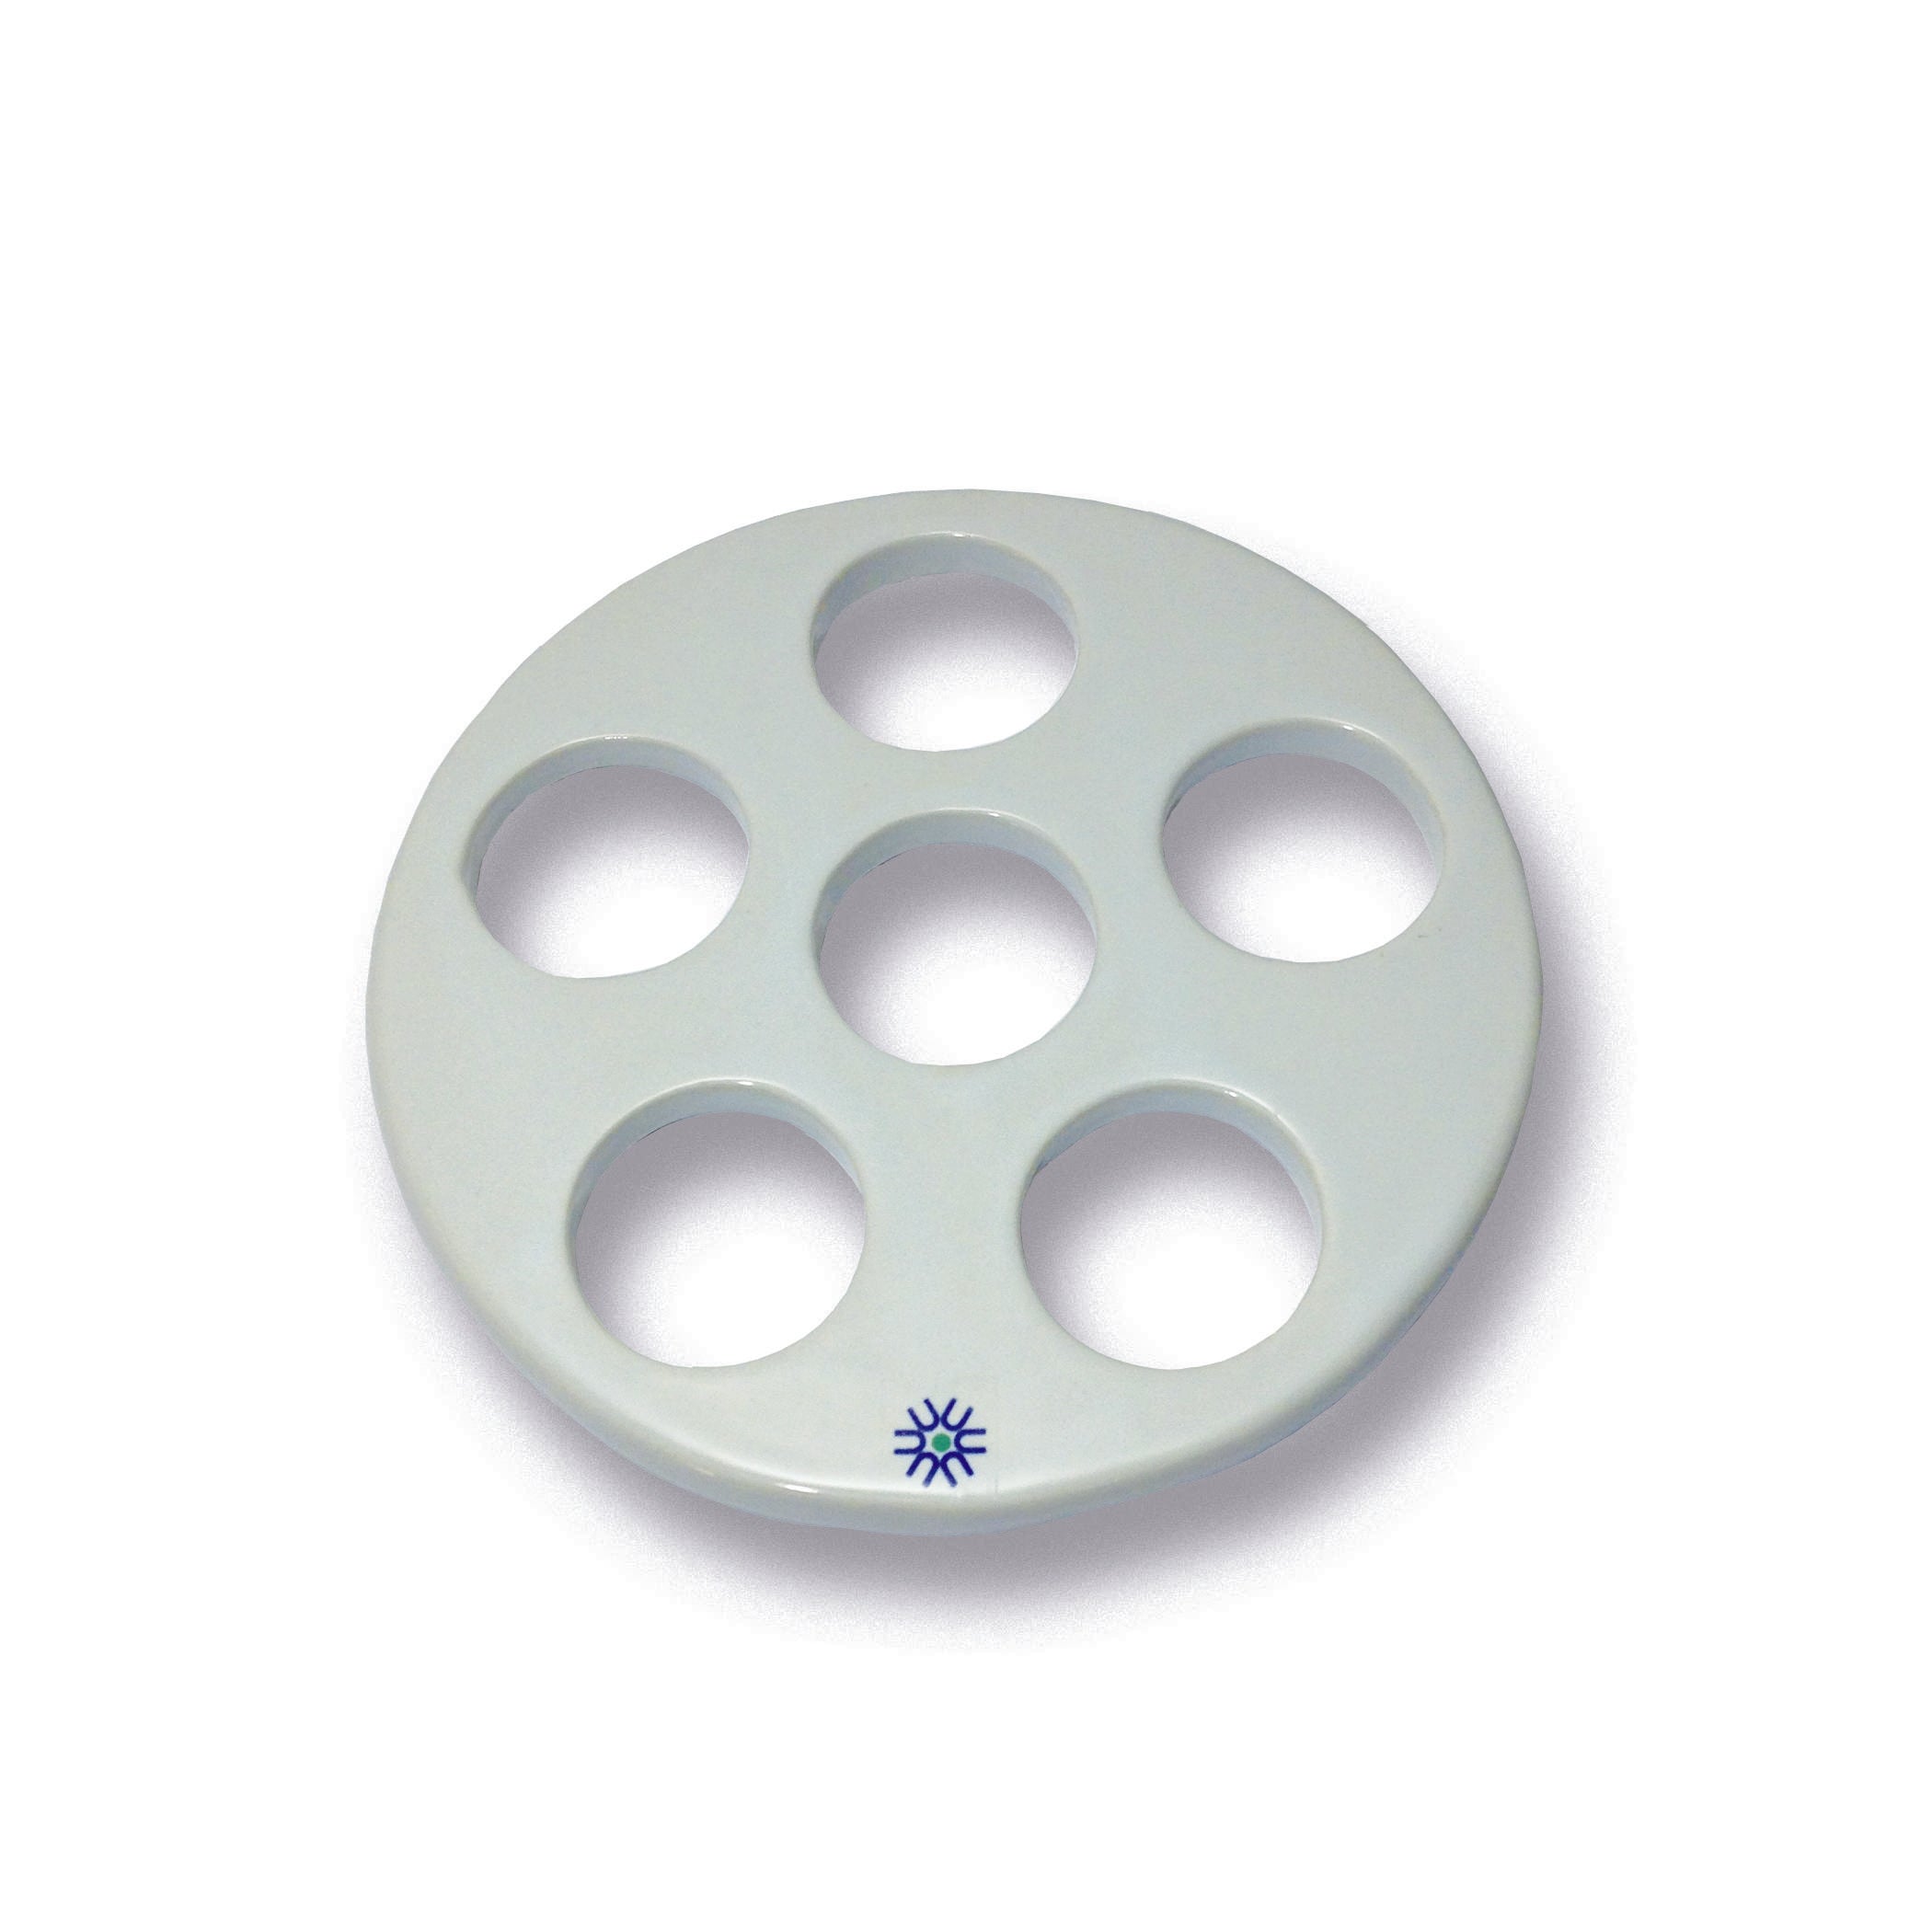 Desiccator Plates with Large Holes, Porcelain